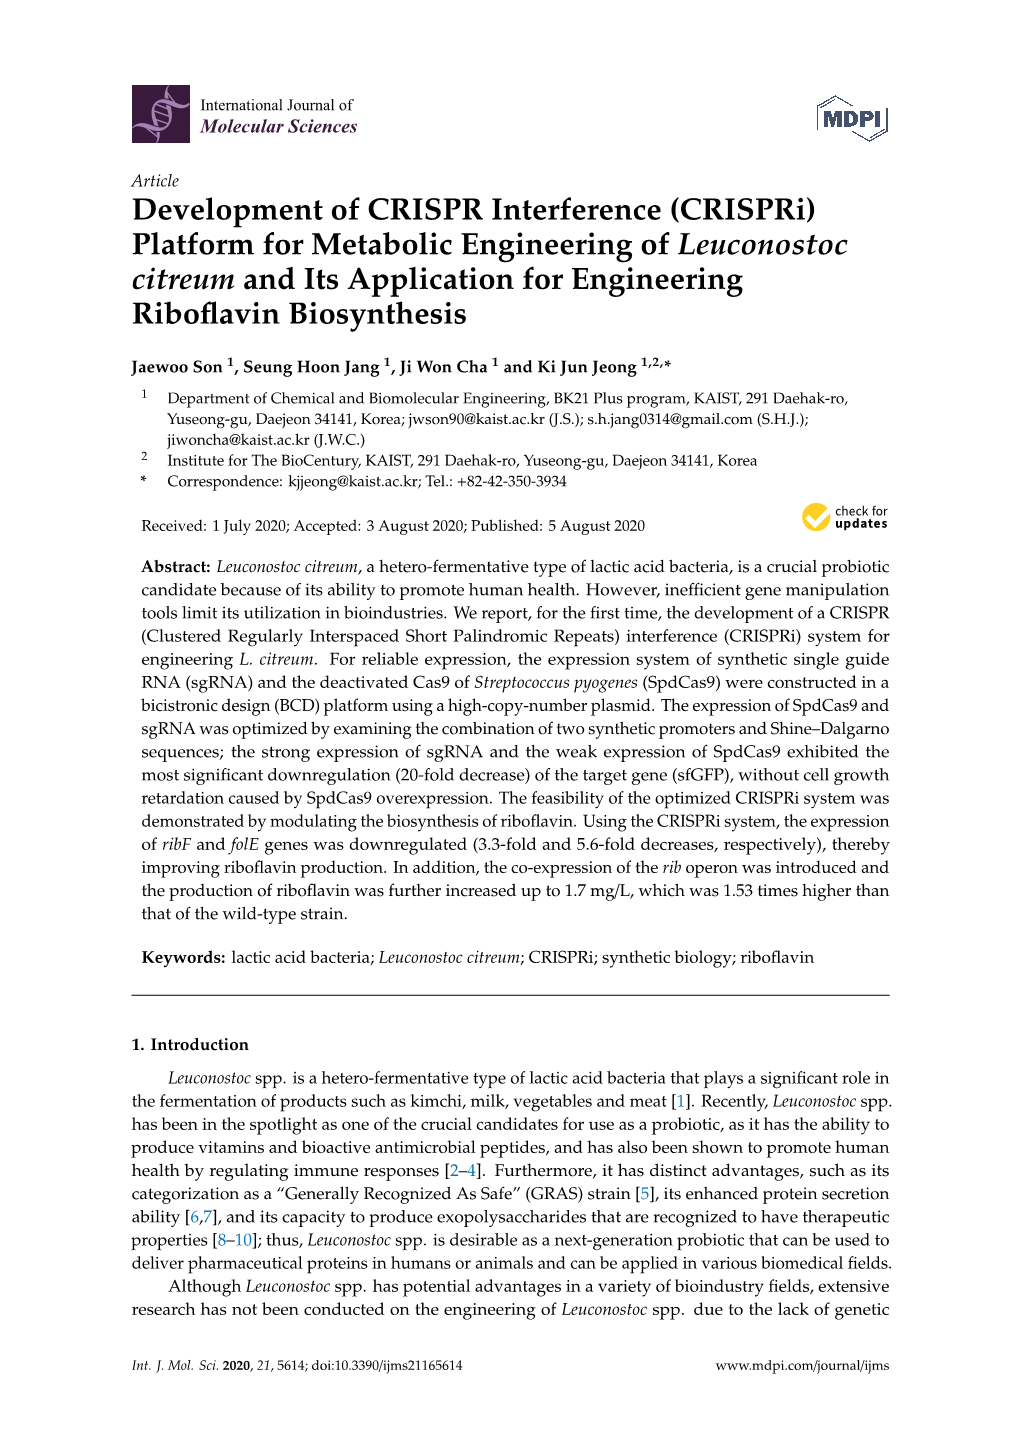 Development of CRISPR Interference (Crispri) Platform for Metabolic Engineering of Leuconostoc Citreum and Its Application for Engineering Riboﬂavin Biosynthesis